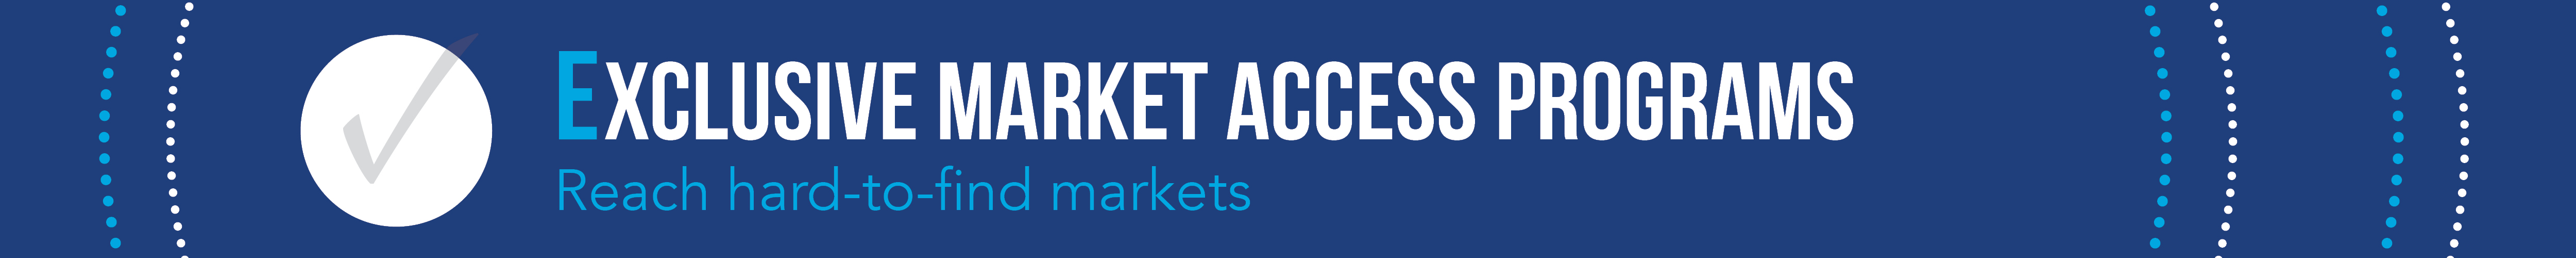 Exclusive Market Access Programs